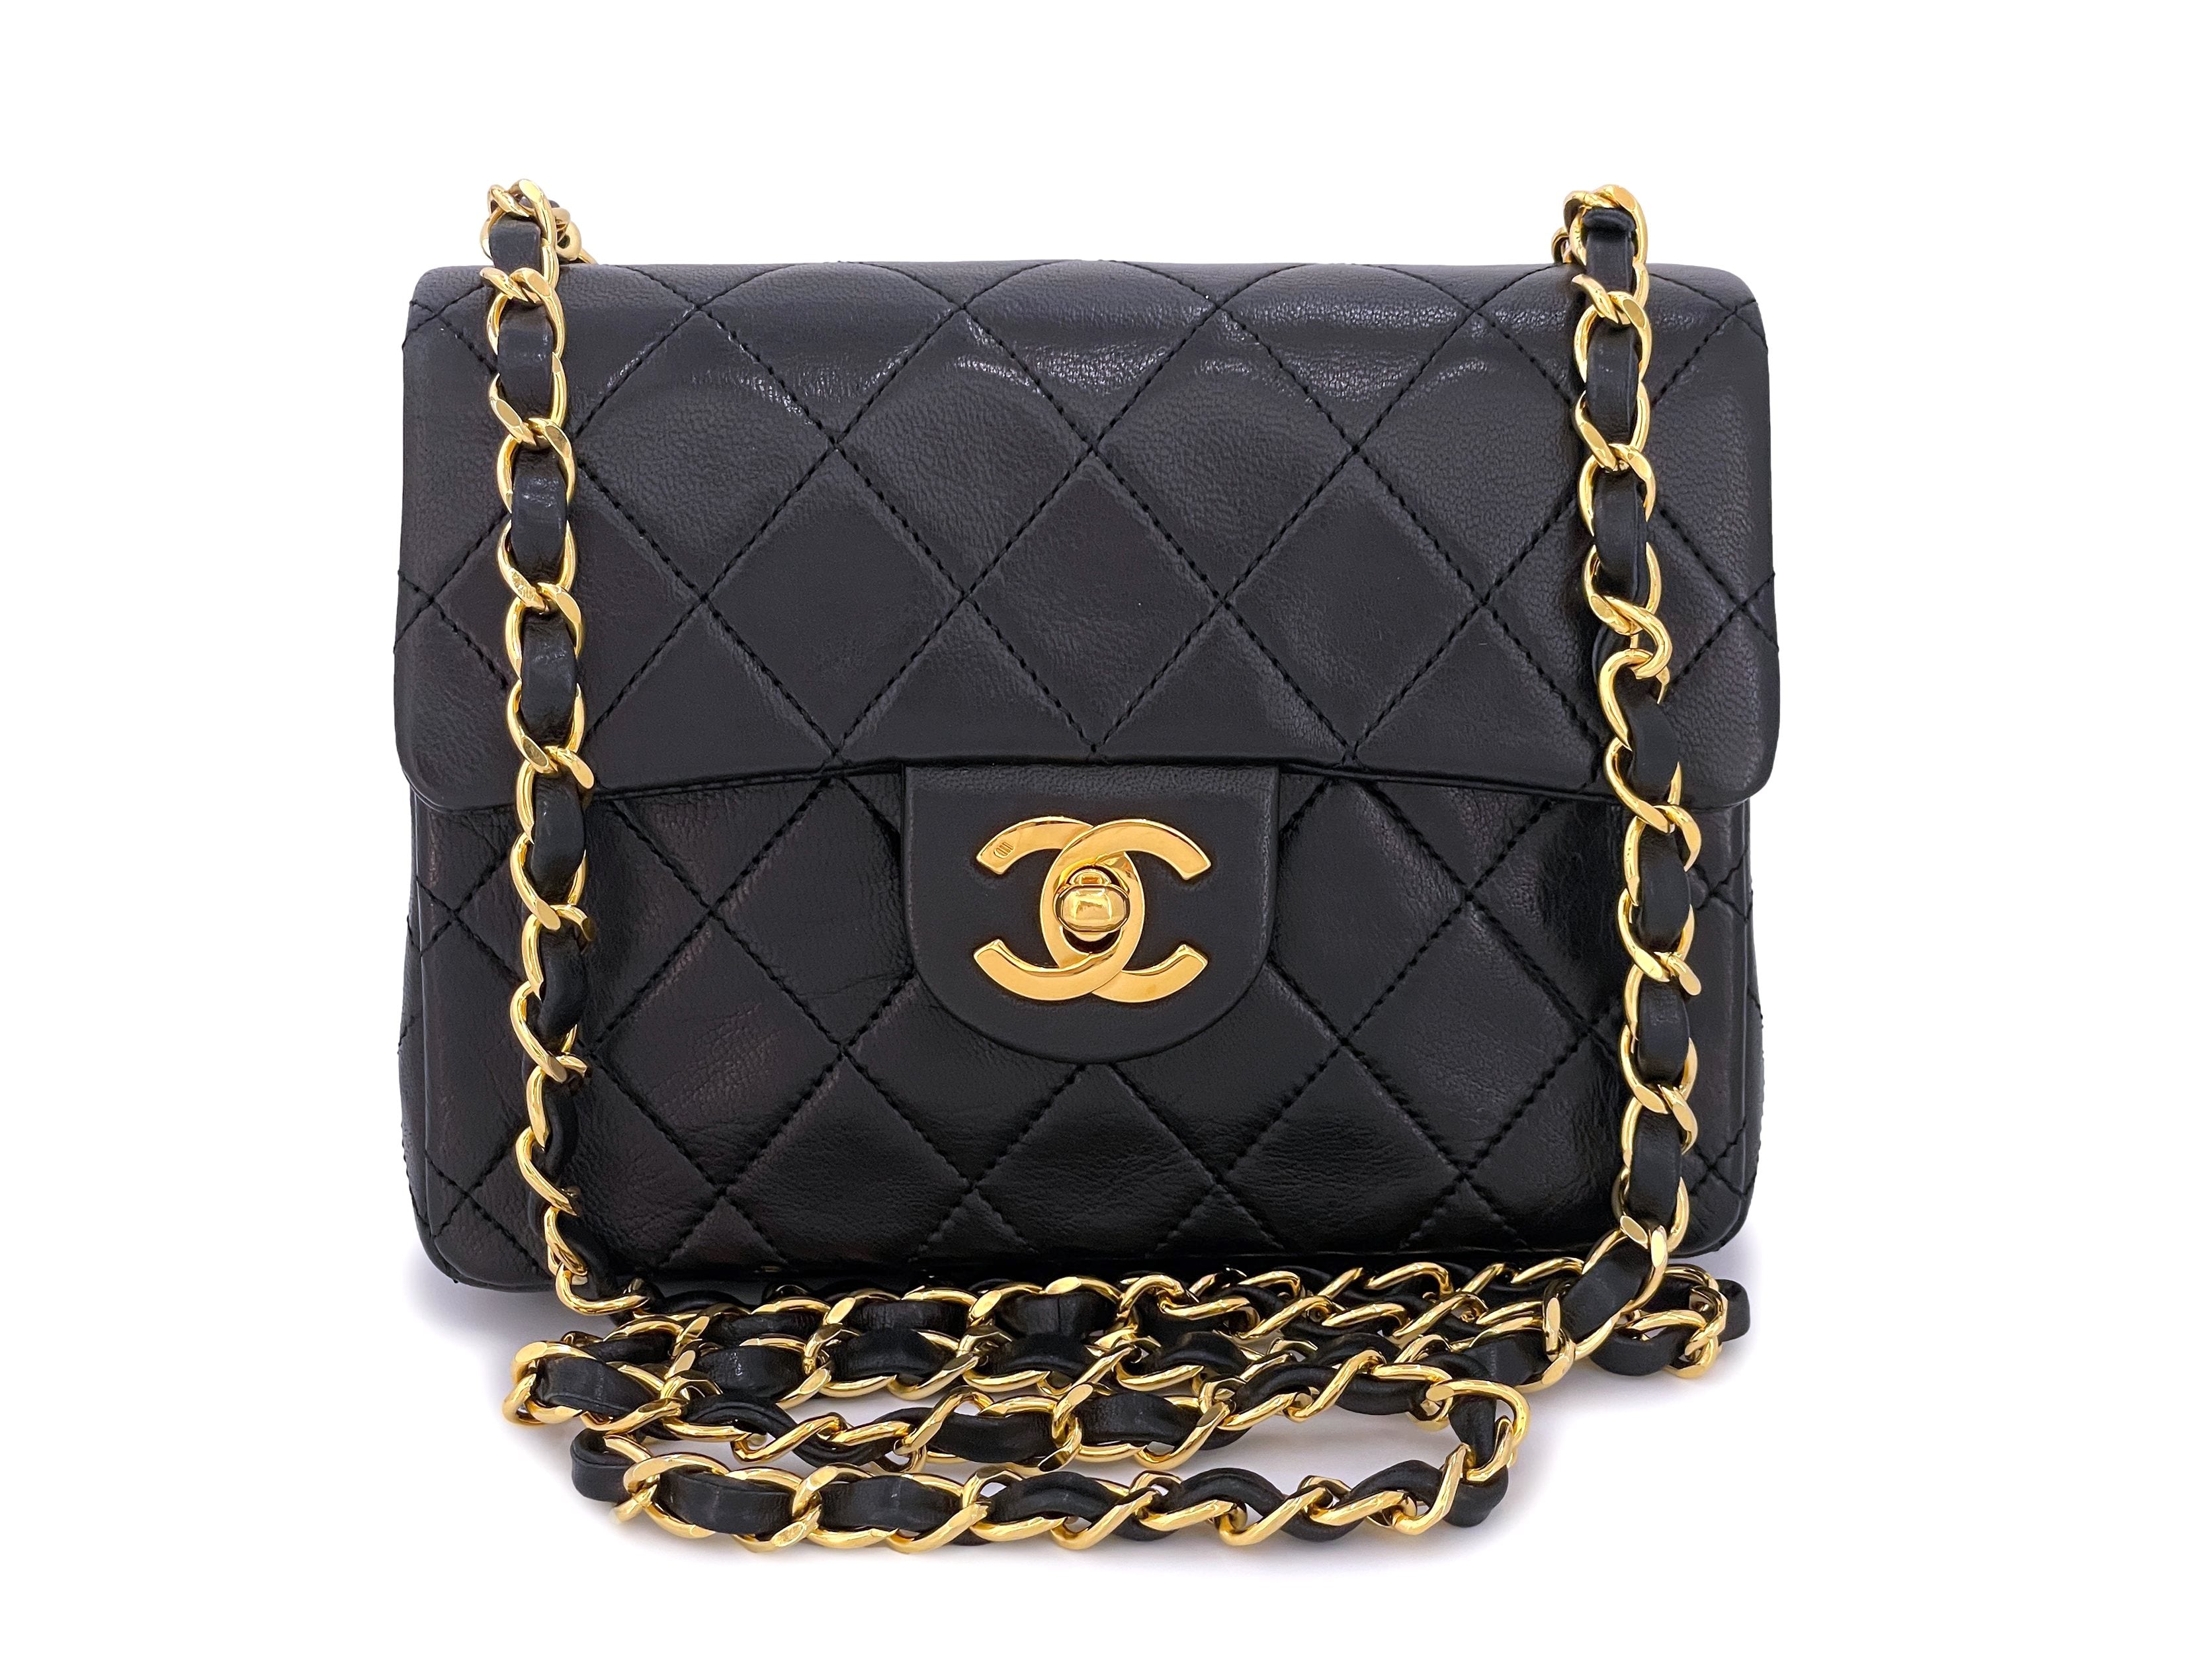 Vintage 1990s Chanel Lambskin Double Flap Bag - Black